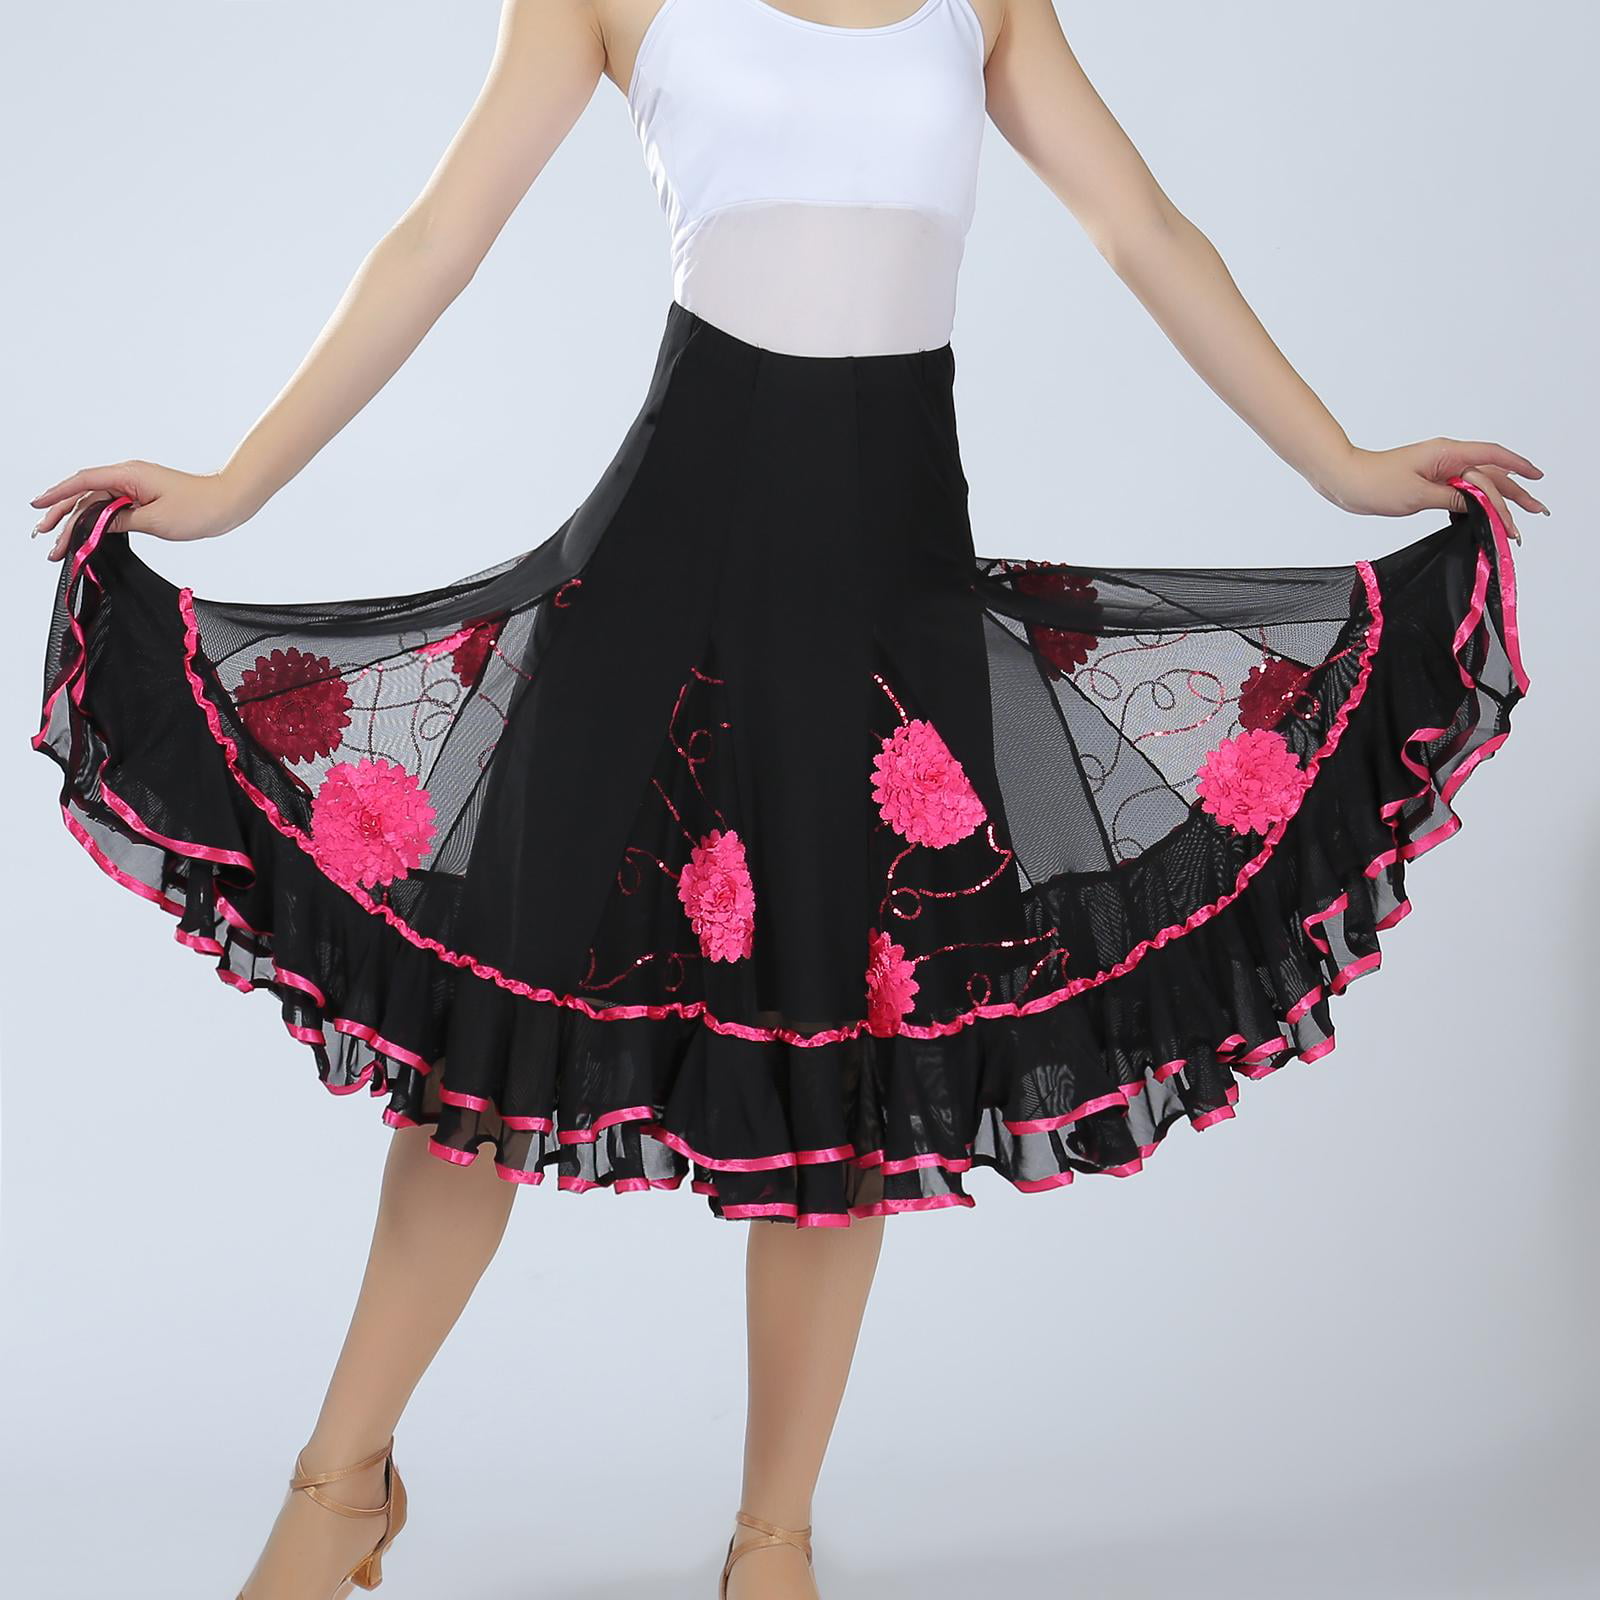 NFACE Elegant Ballroom Dancing Latin Dance Party Long Swing Race Skirt 